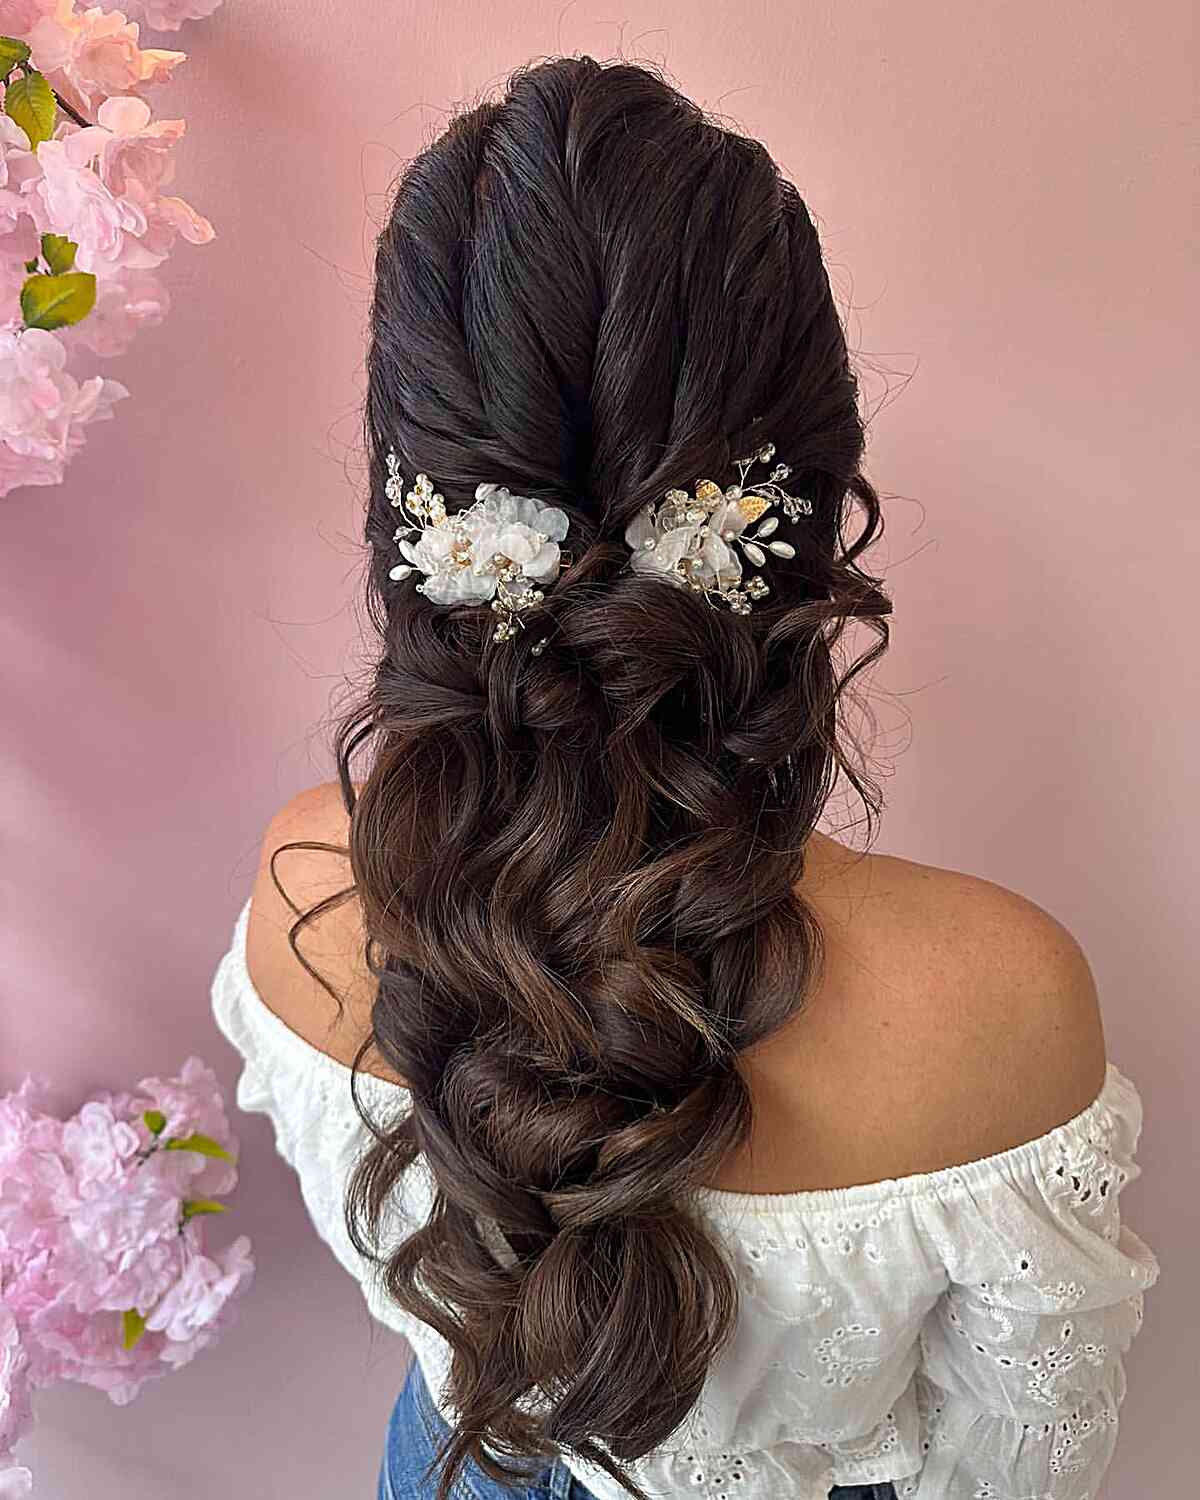 mermaid braid with elegant flower clips for wedding goers